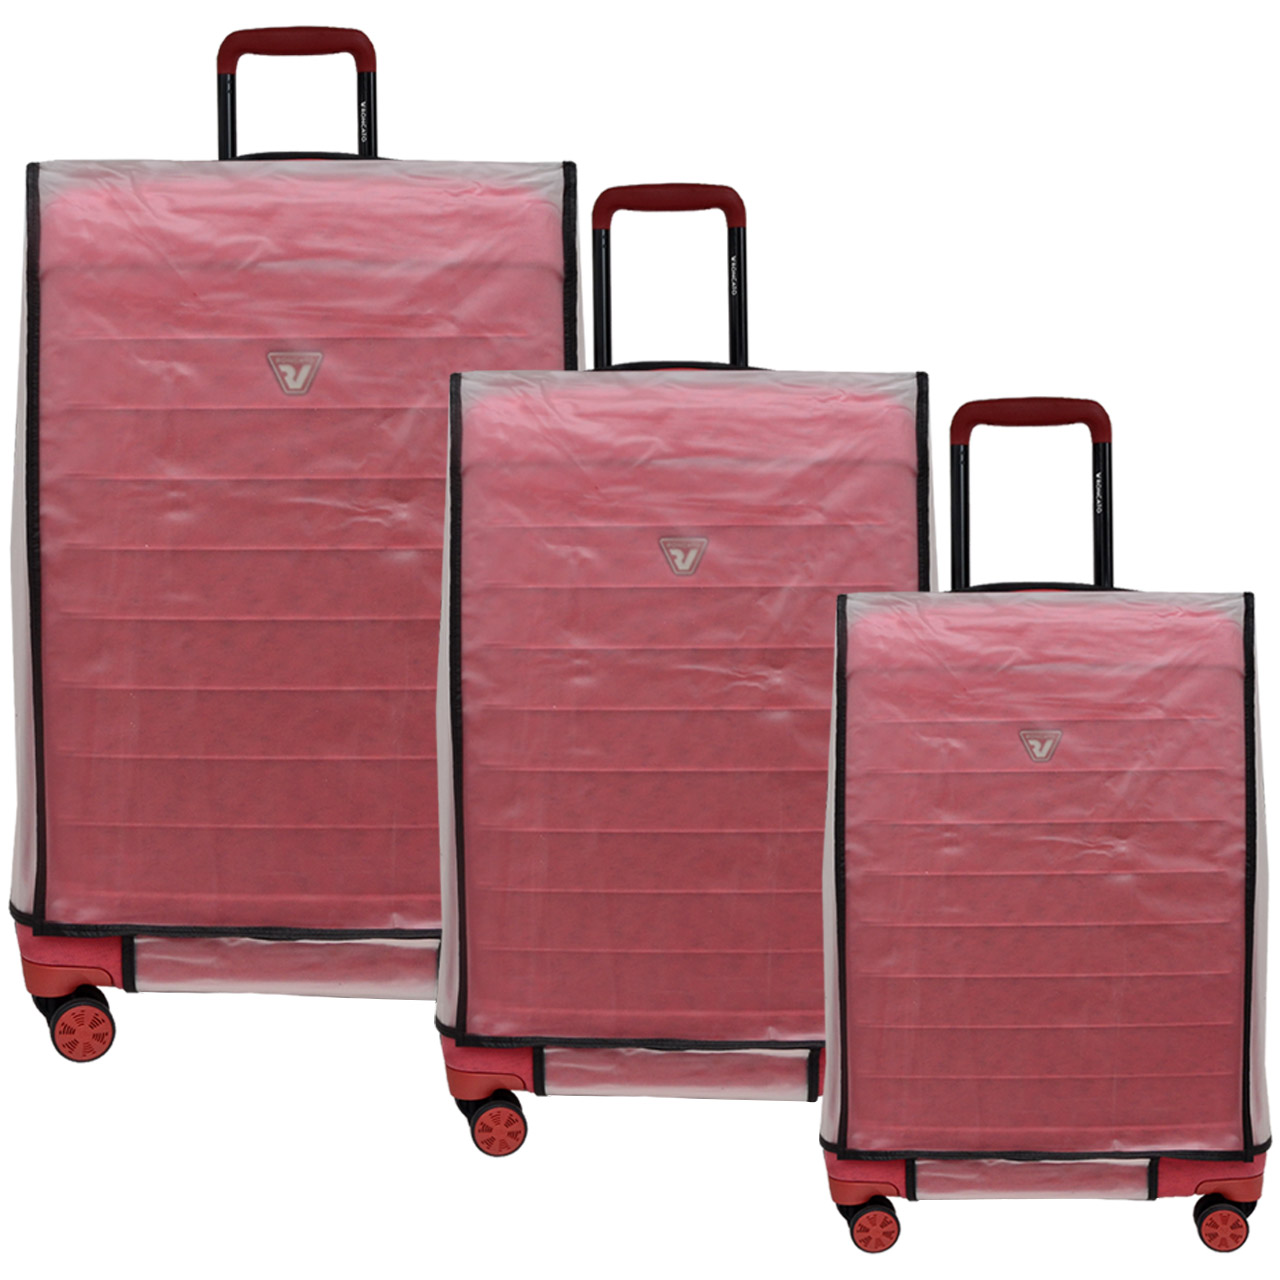 کاور چمدان مدل GLASS 2300002 MT مجموعه 3 عددی| خرید لوازم سفر